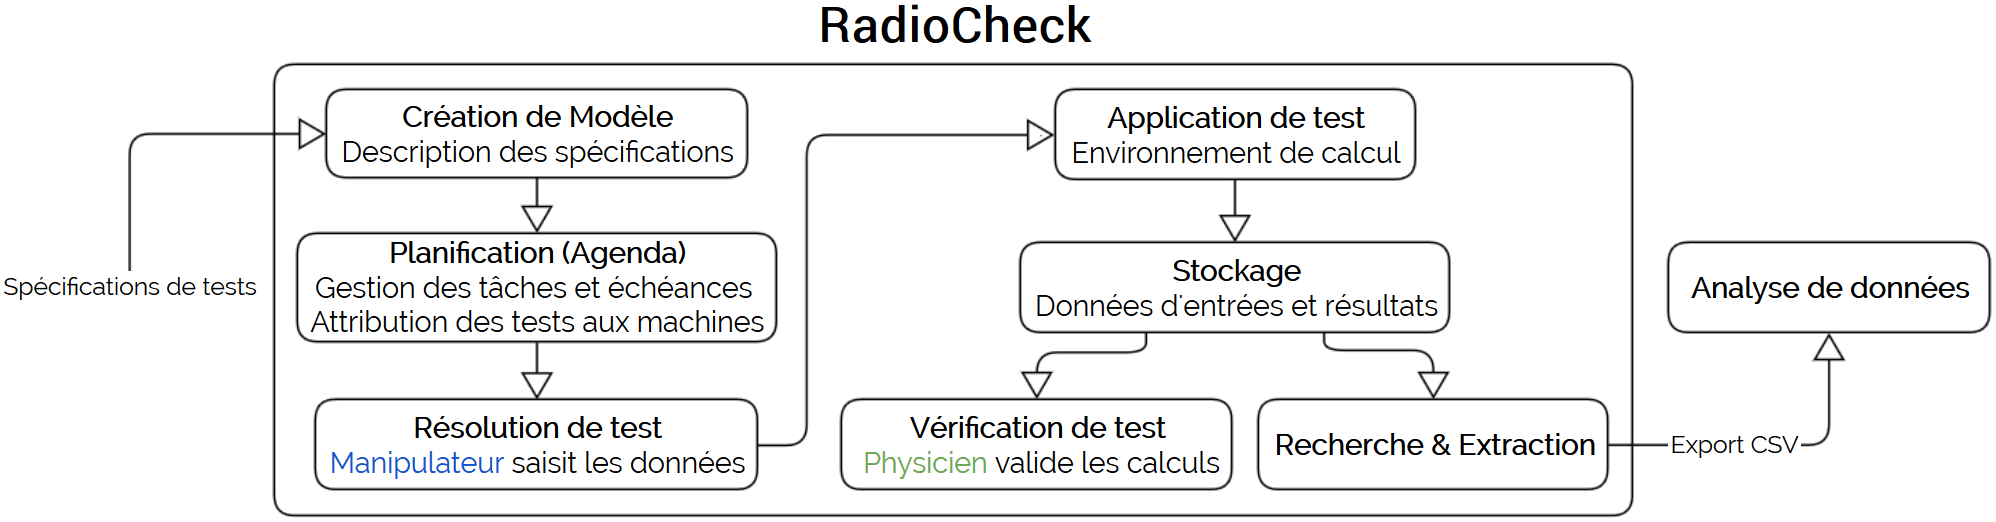 Chaîne d'information RadioCheck